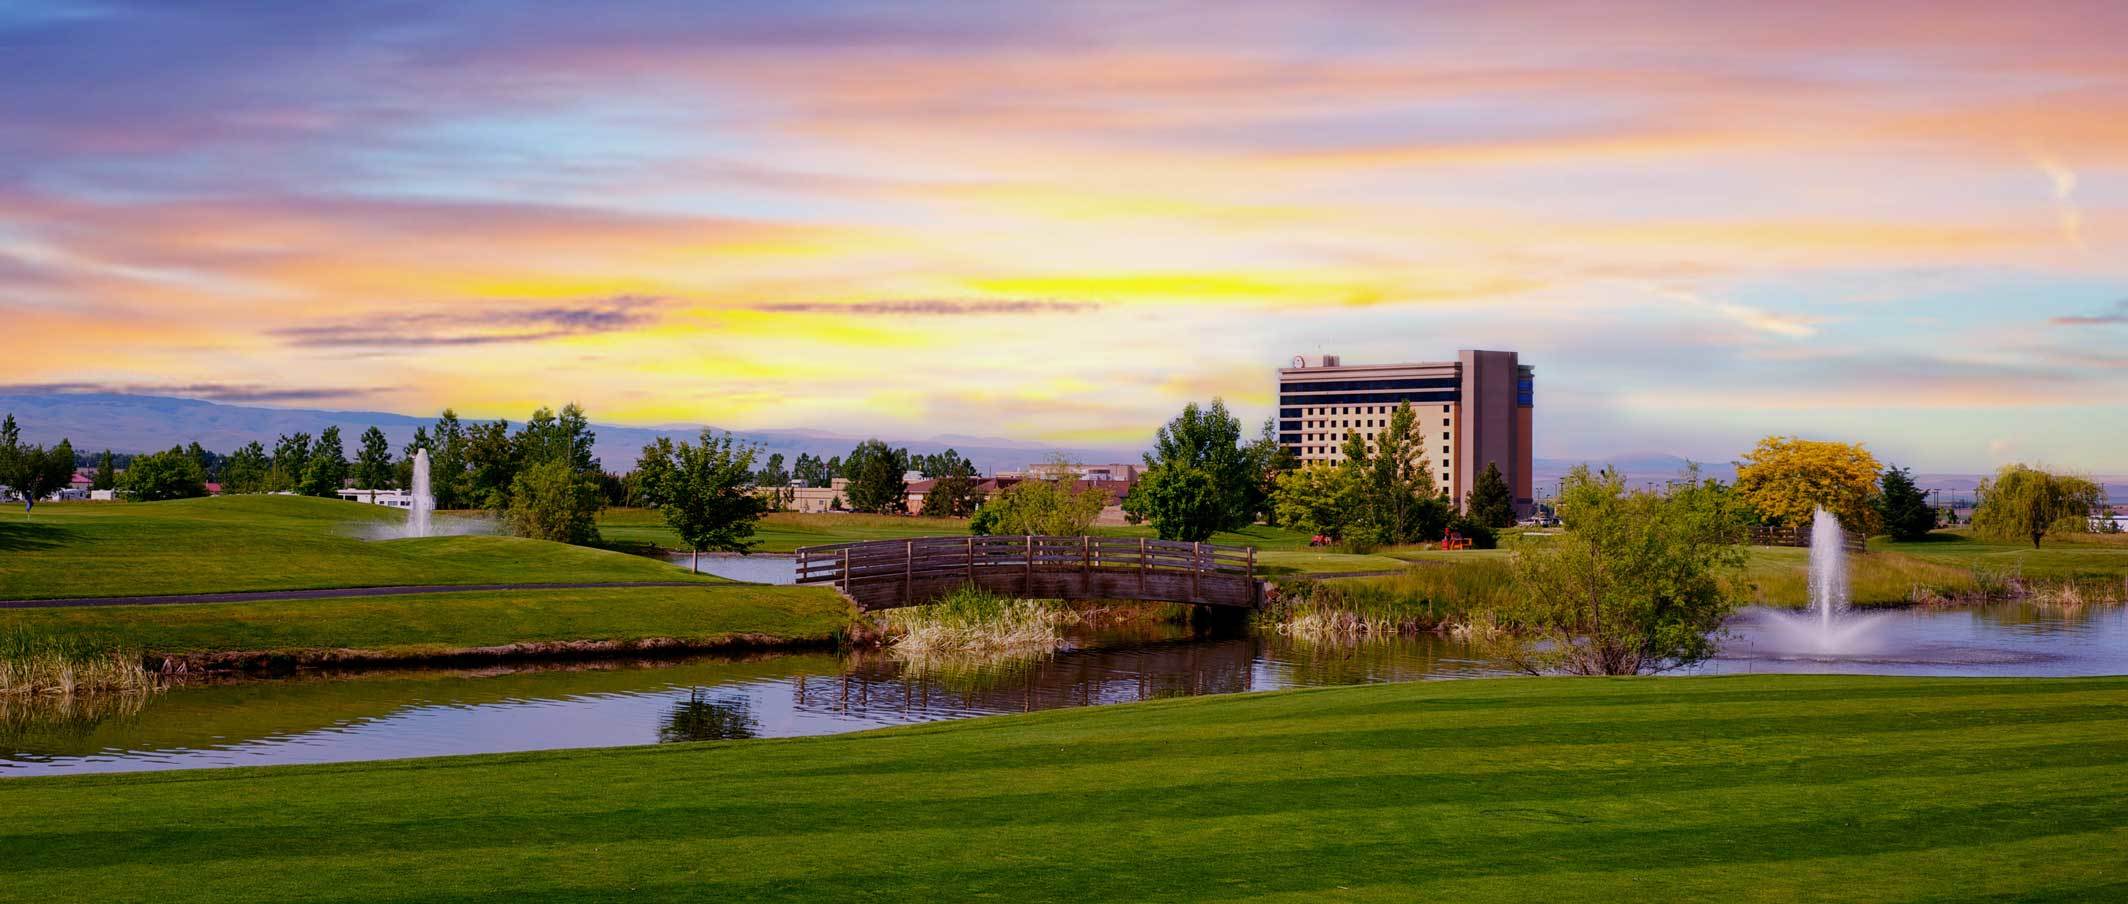 Photo of Wildhorse Resort & Casino, Pendleton, OR